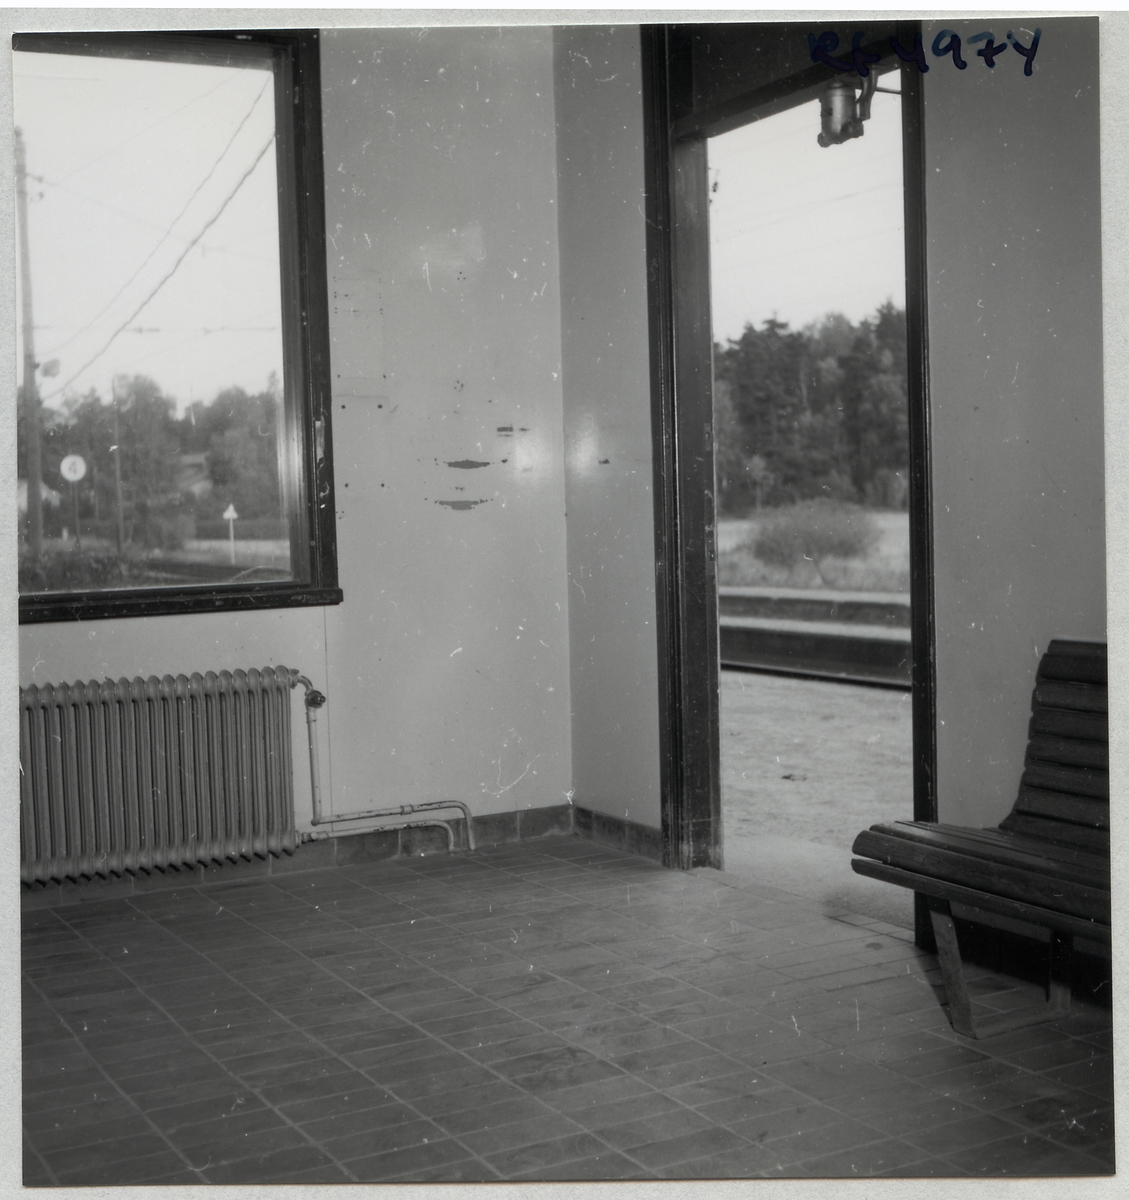 Djursholms Ekeby station.